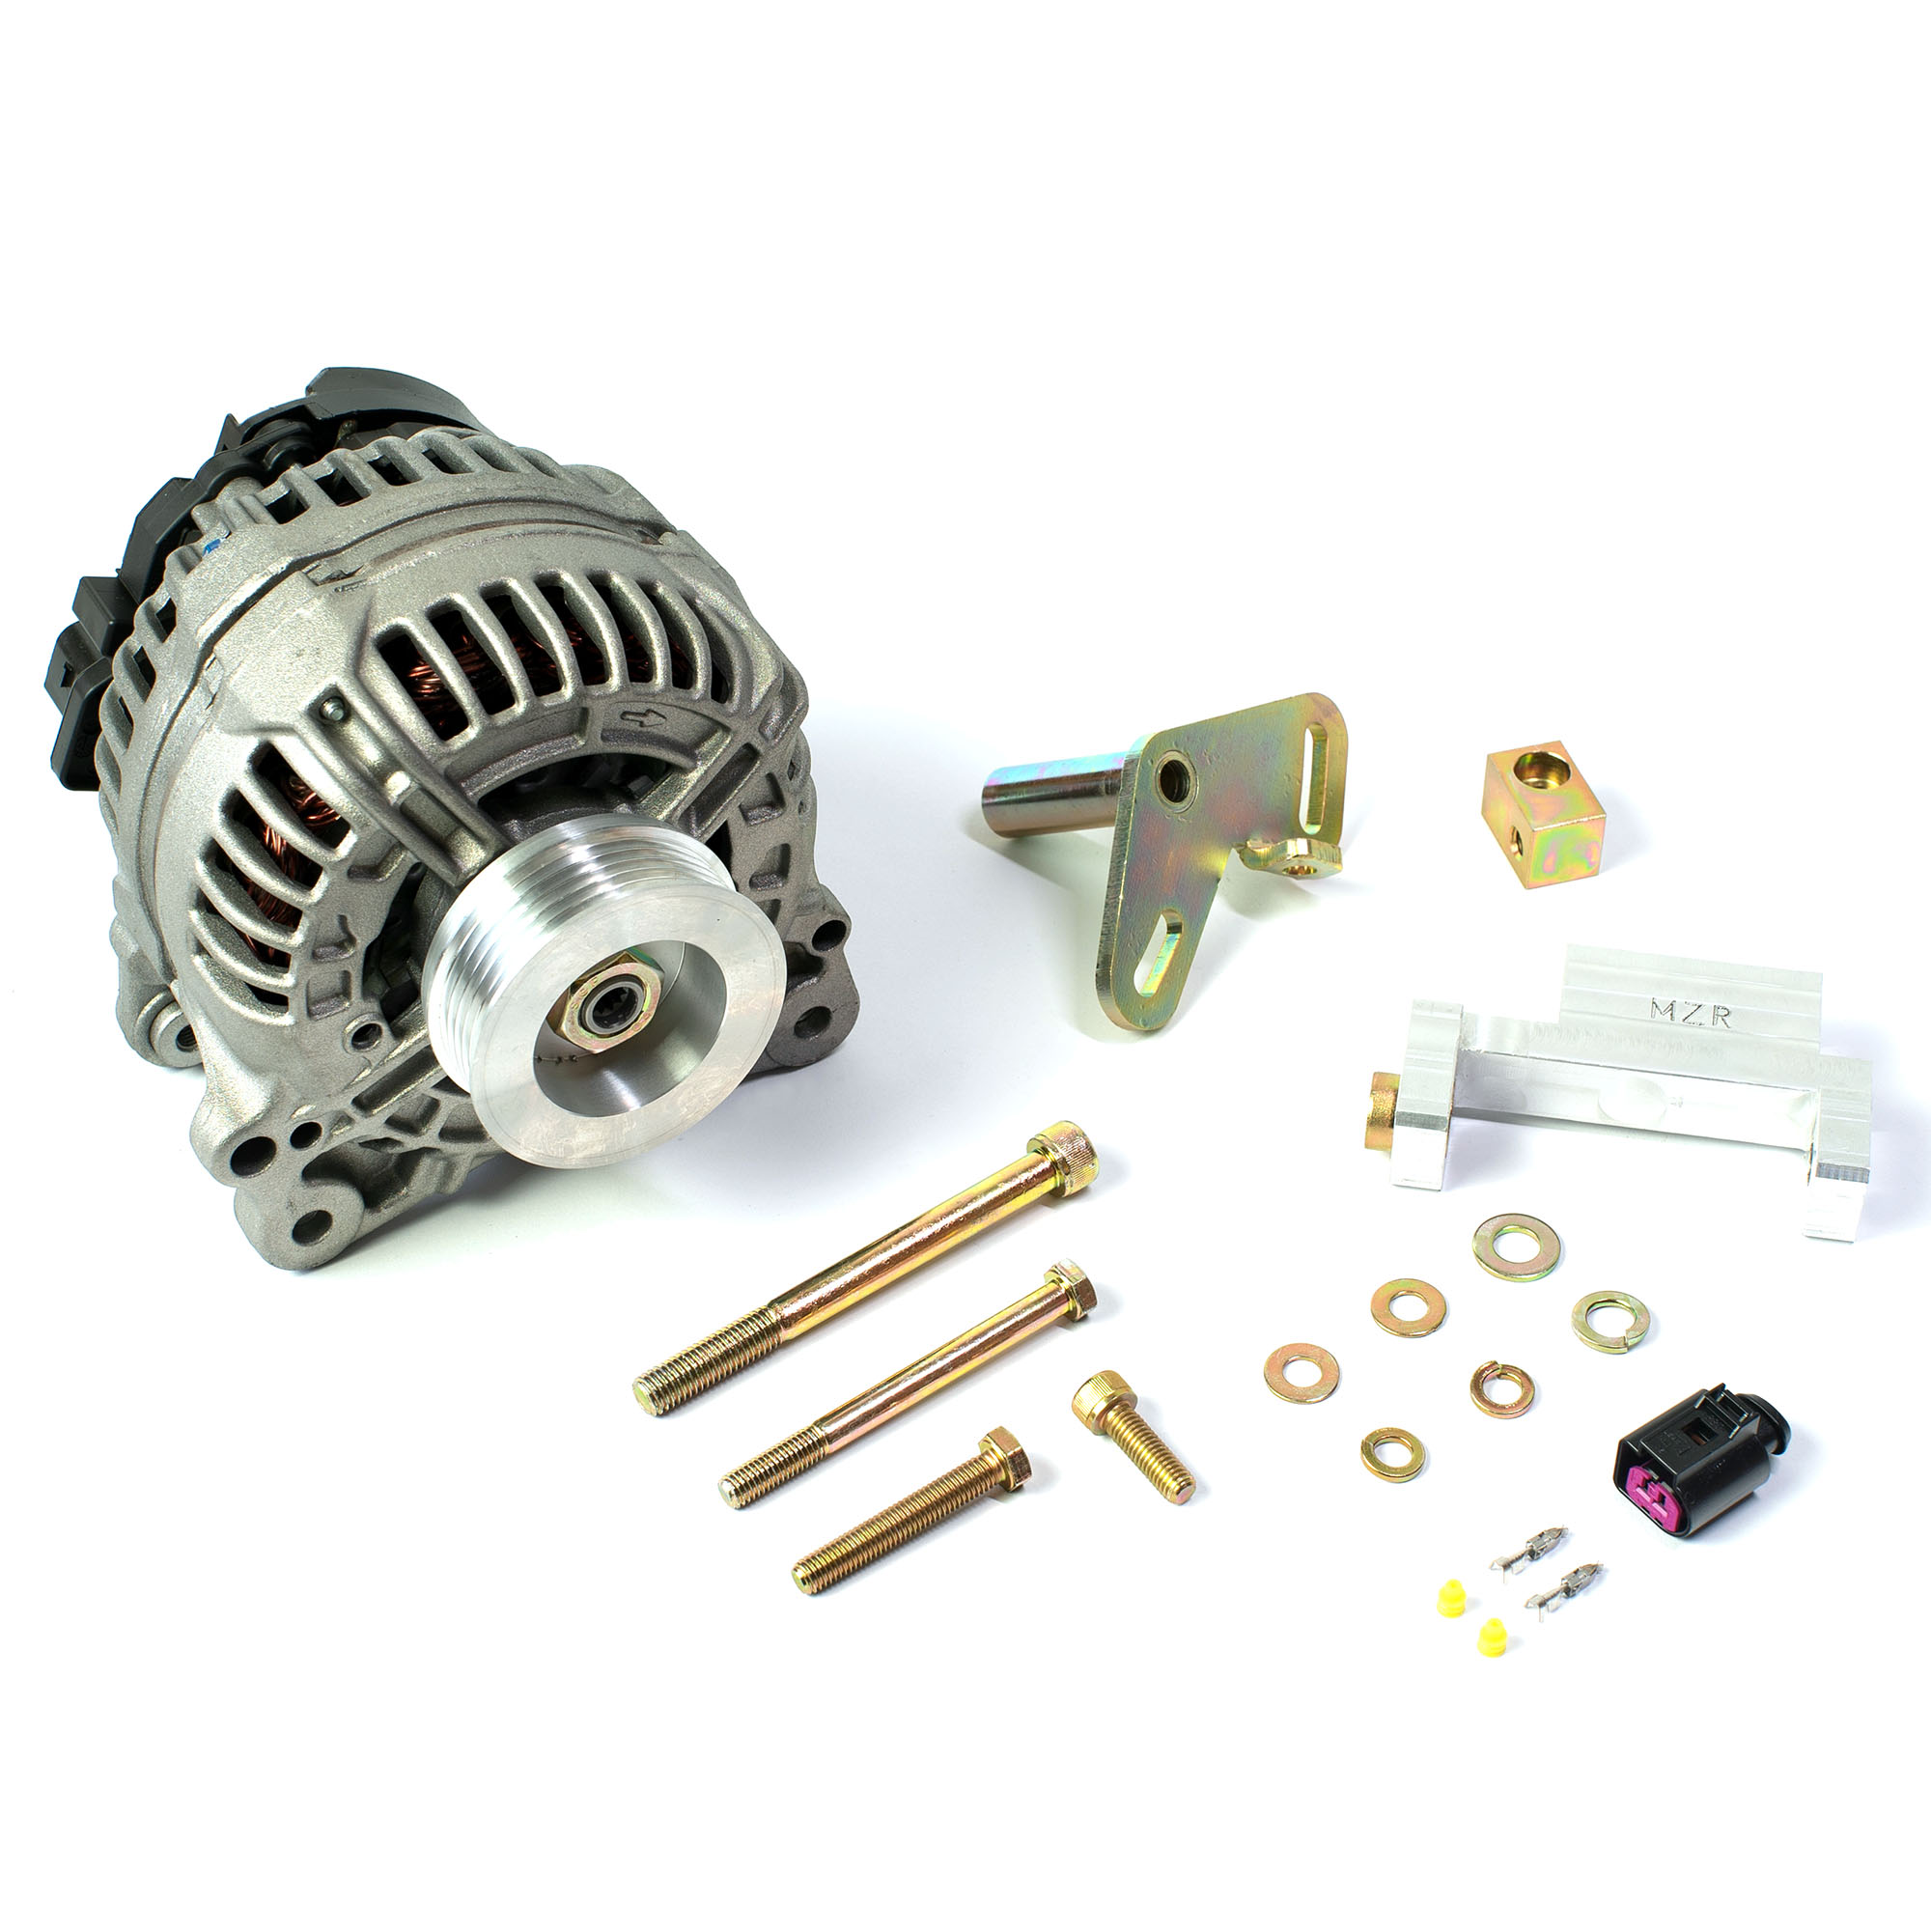 Bosch Alternator Kit for Nissan SR20 Engines